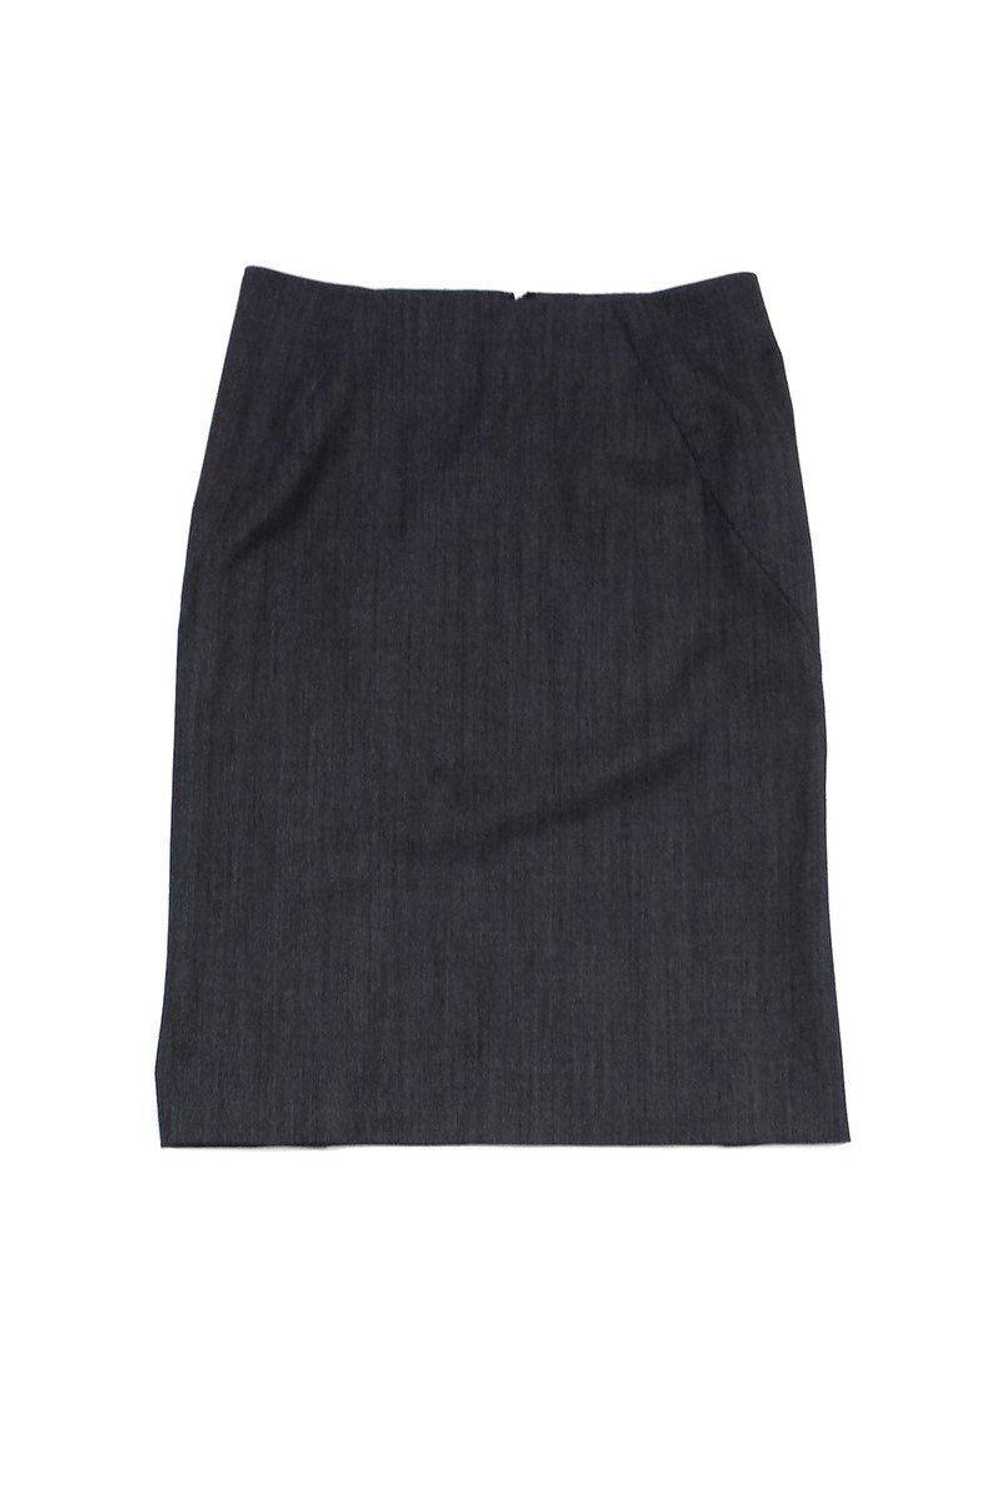 Theory - Grey Wool Suit Skirt Sz 0 - image 1